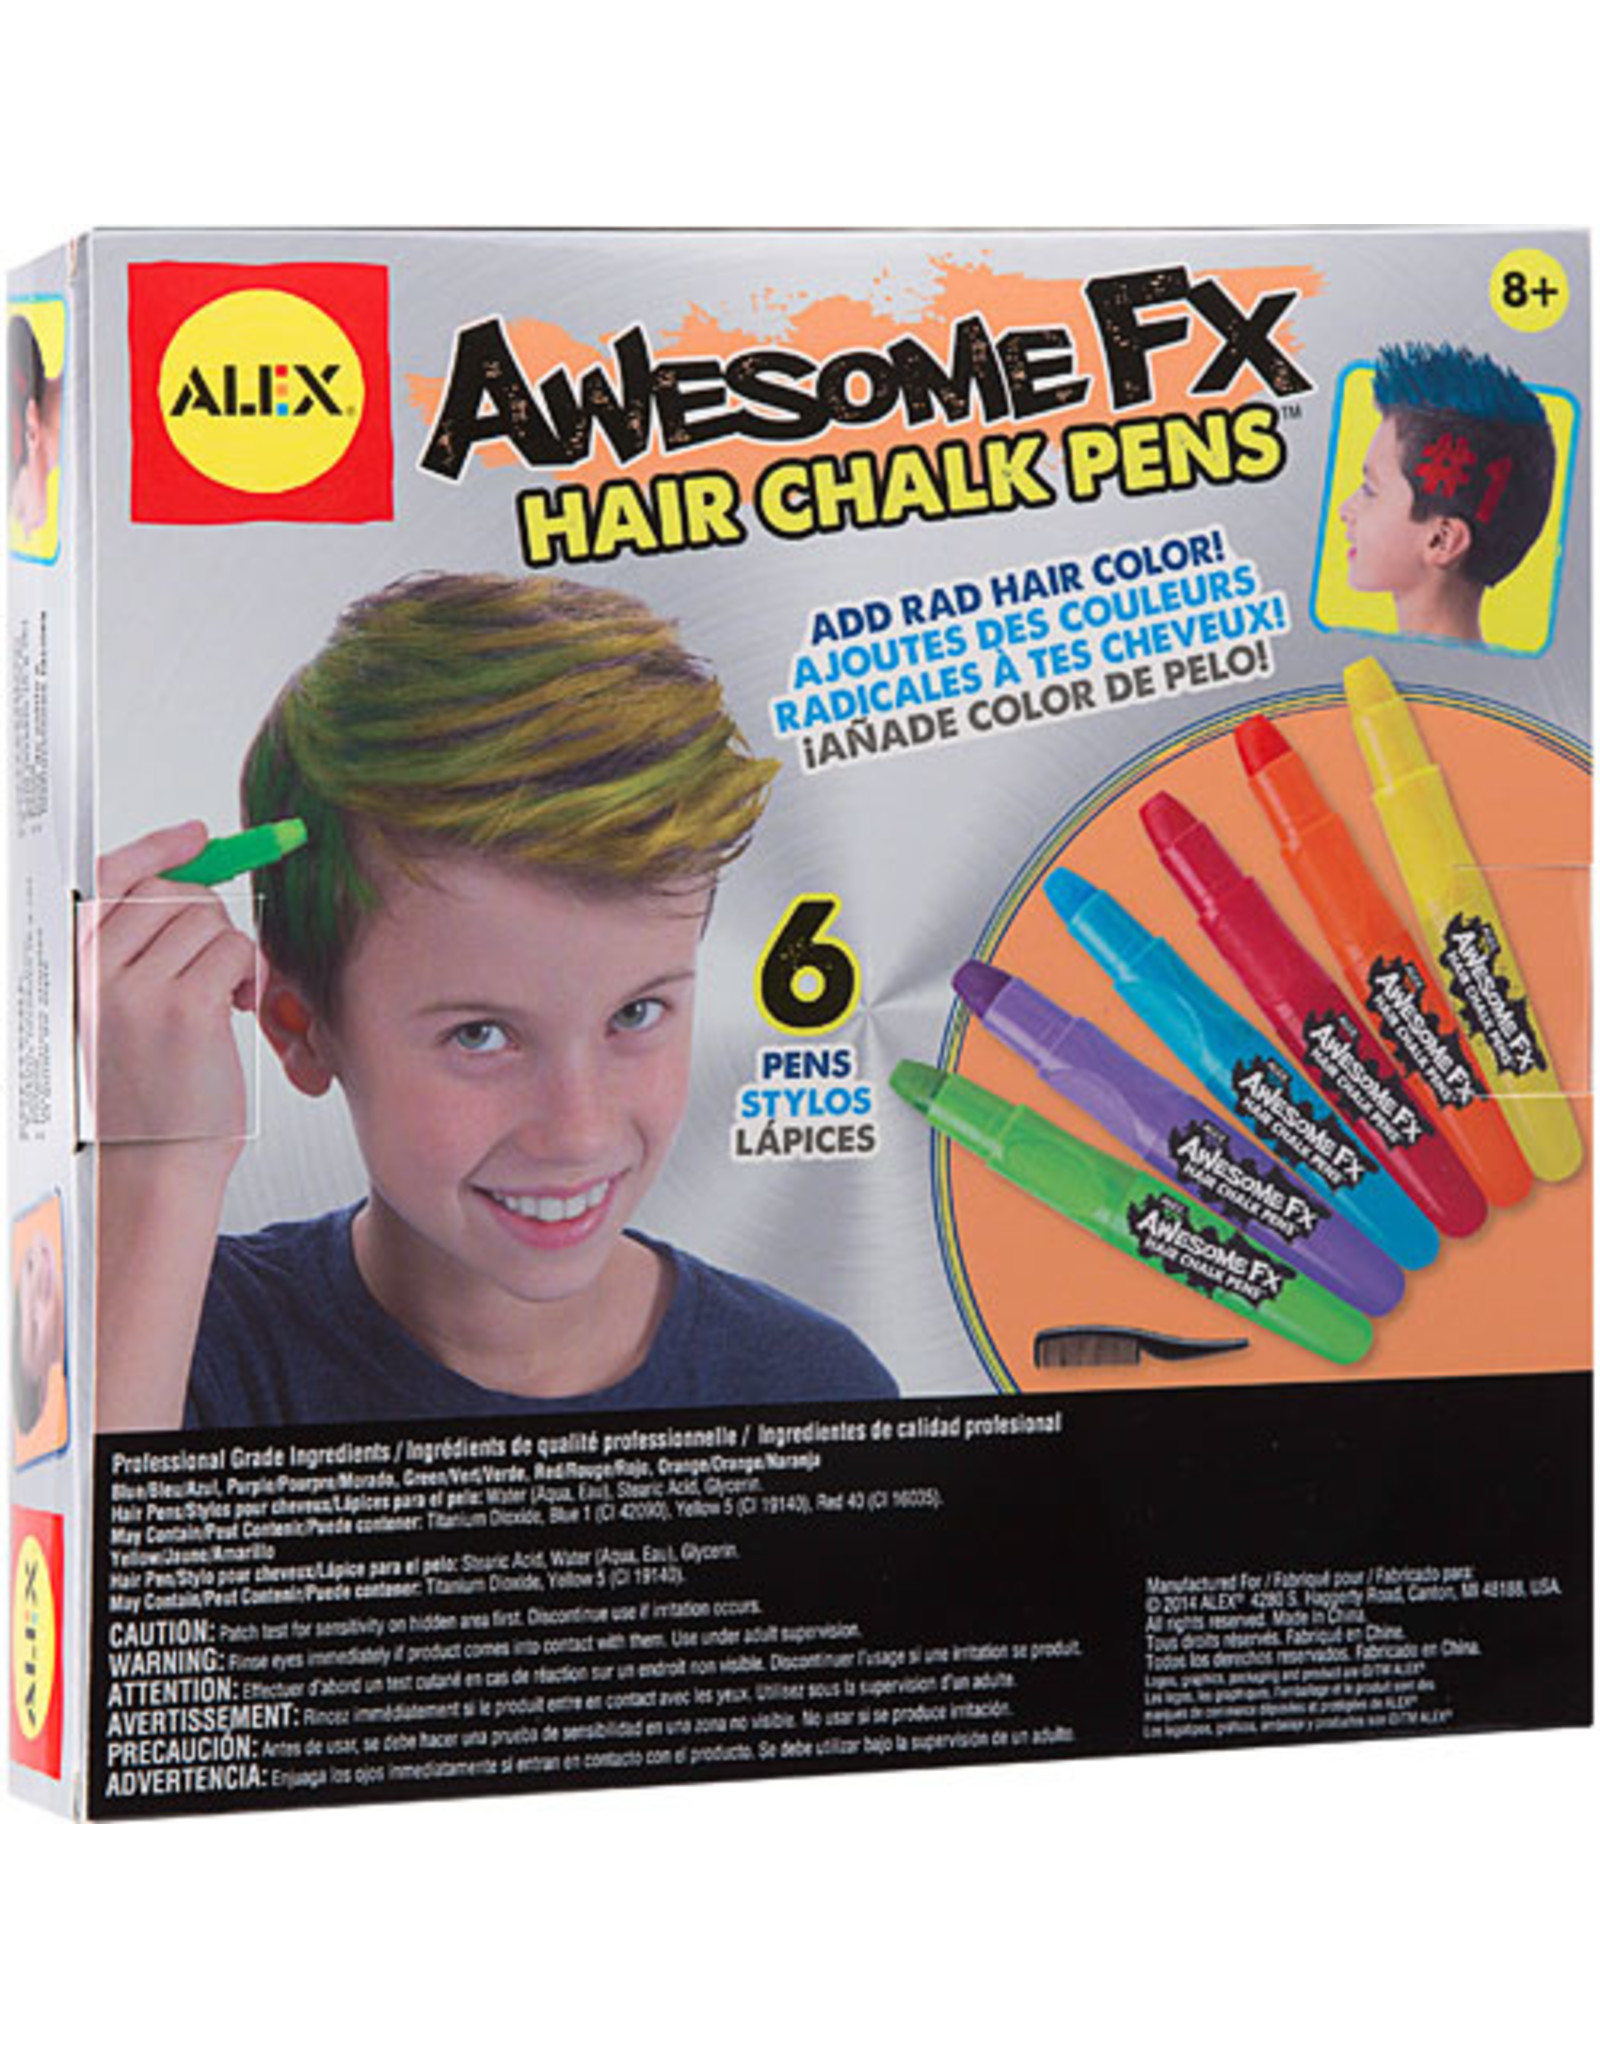 ALEX AWESOME FX HAIR CHALK